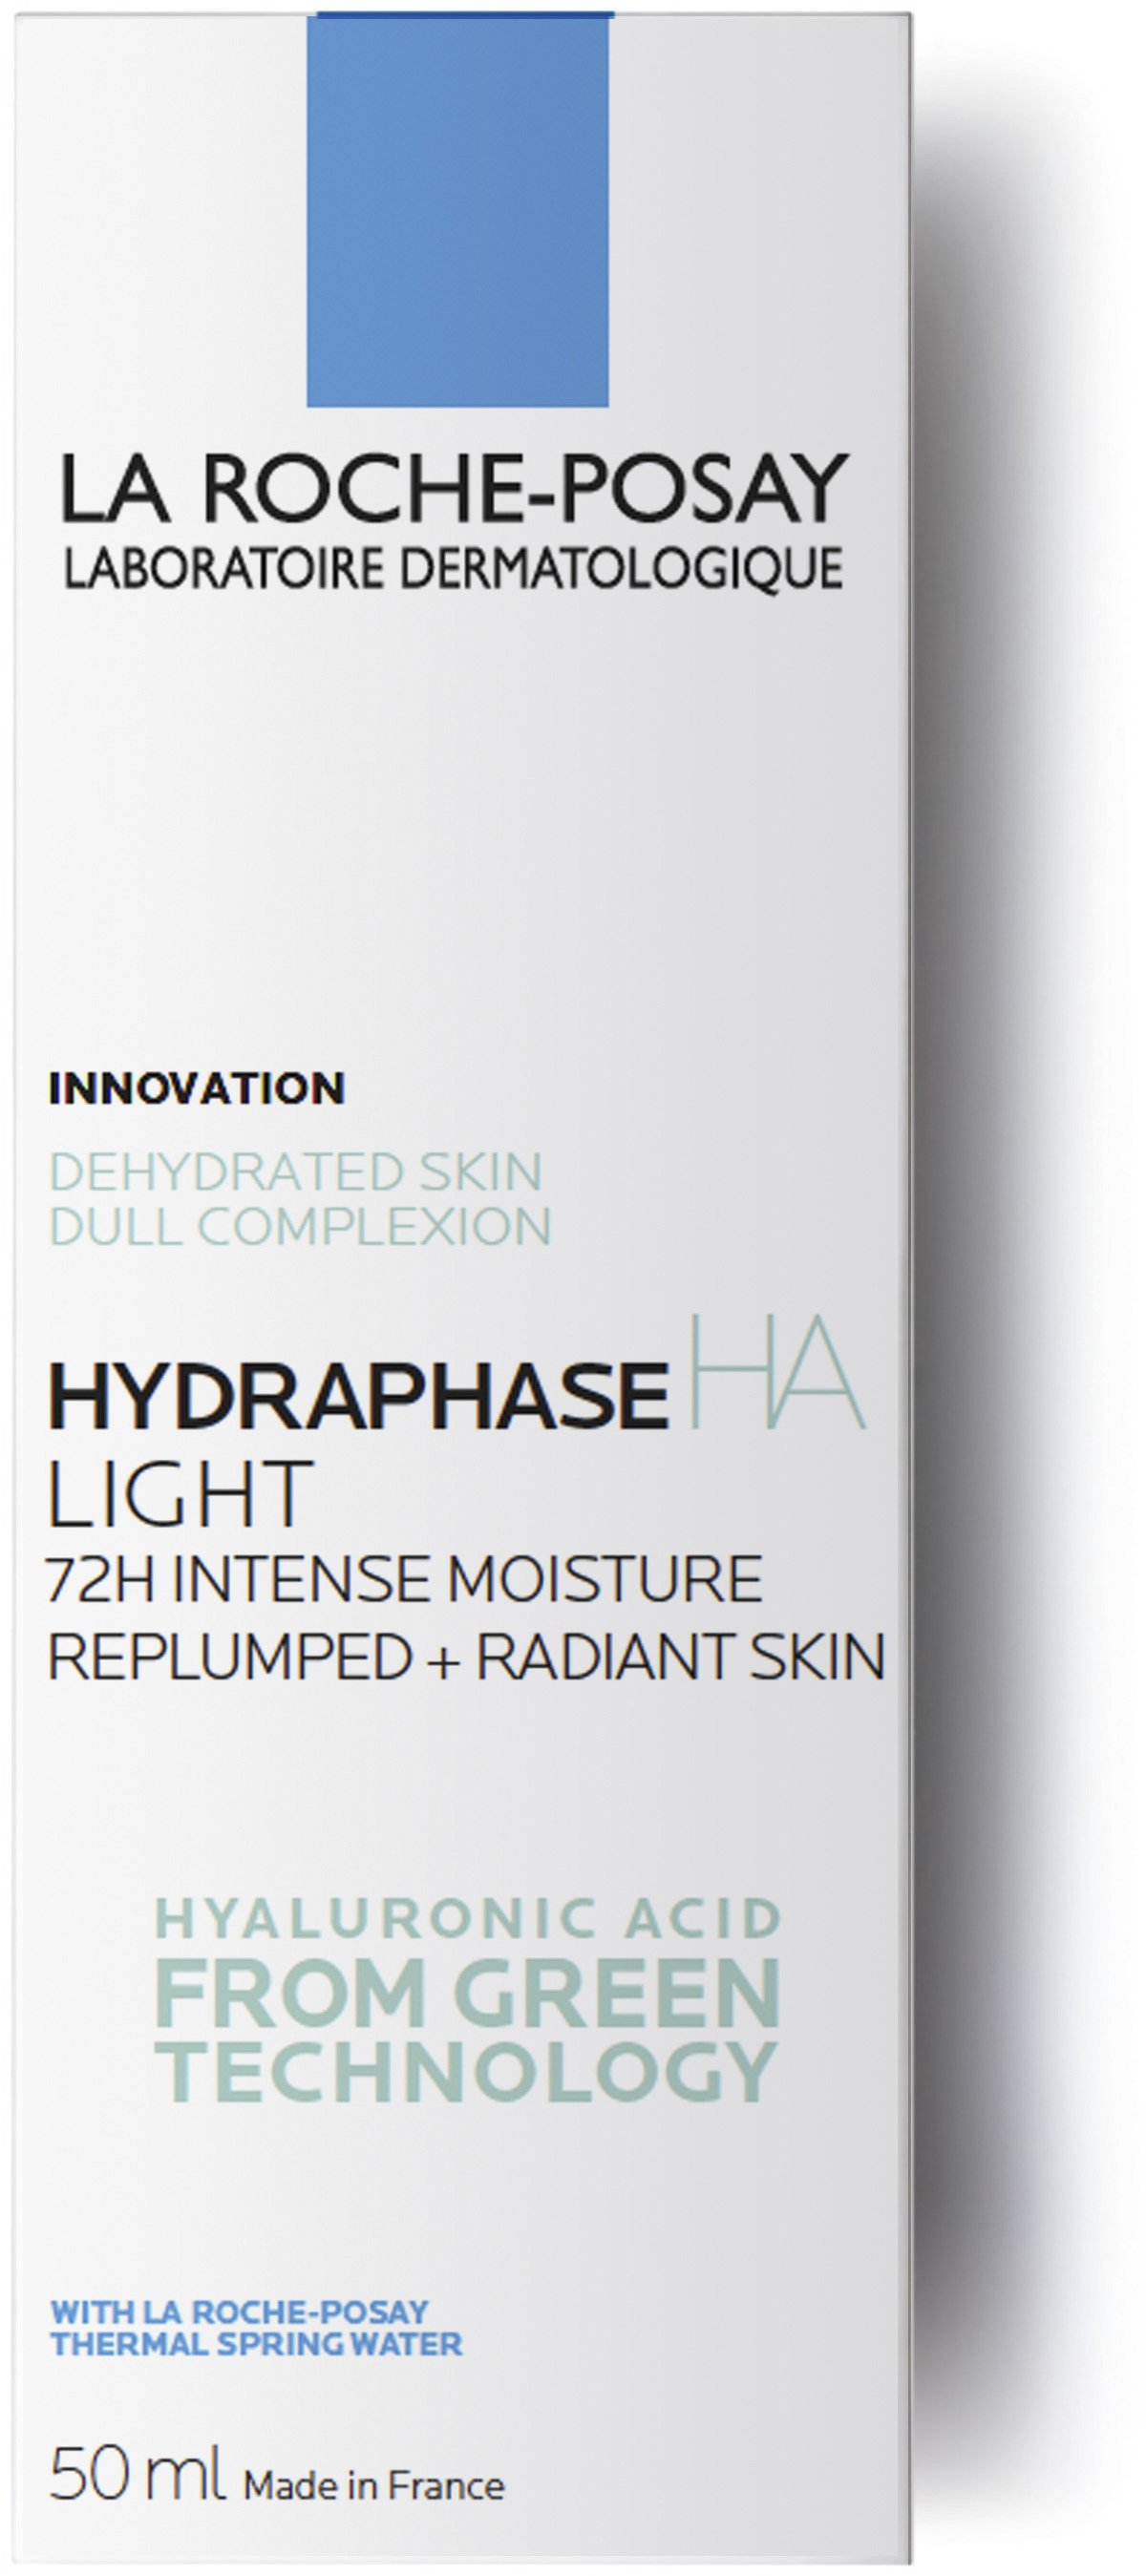 La Roche Posay Hydraphase HA Light 72h Intense Moisture 50 ml